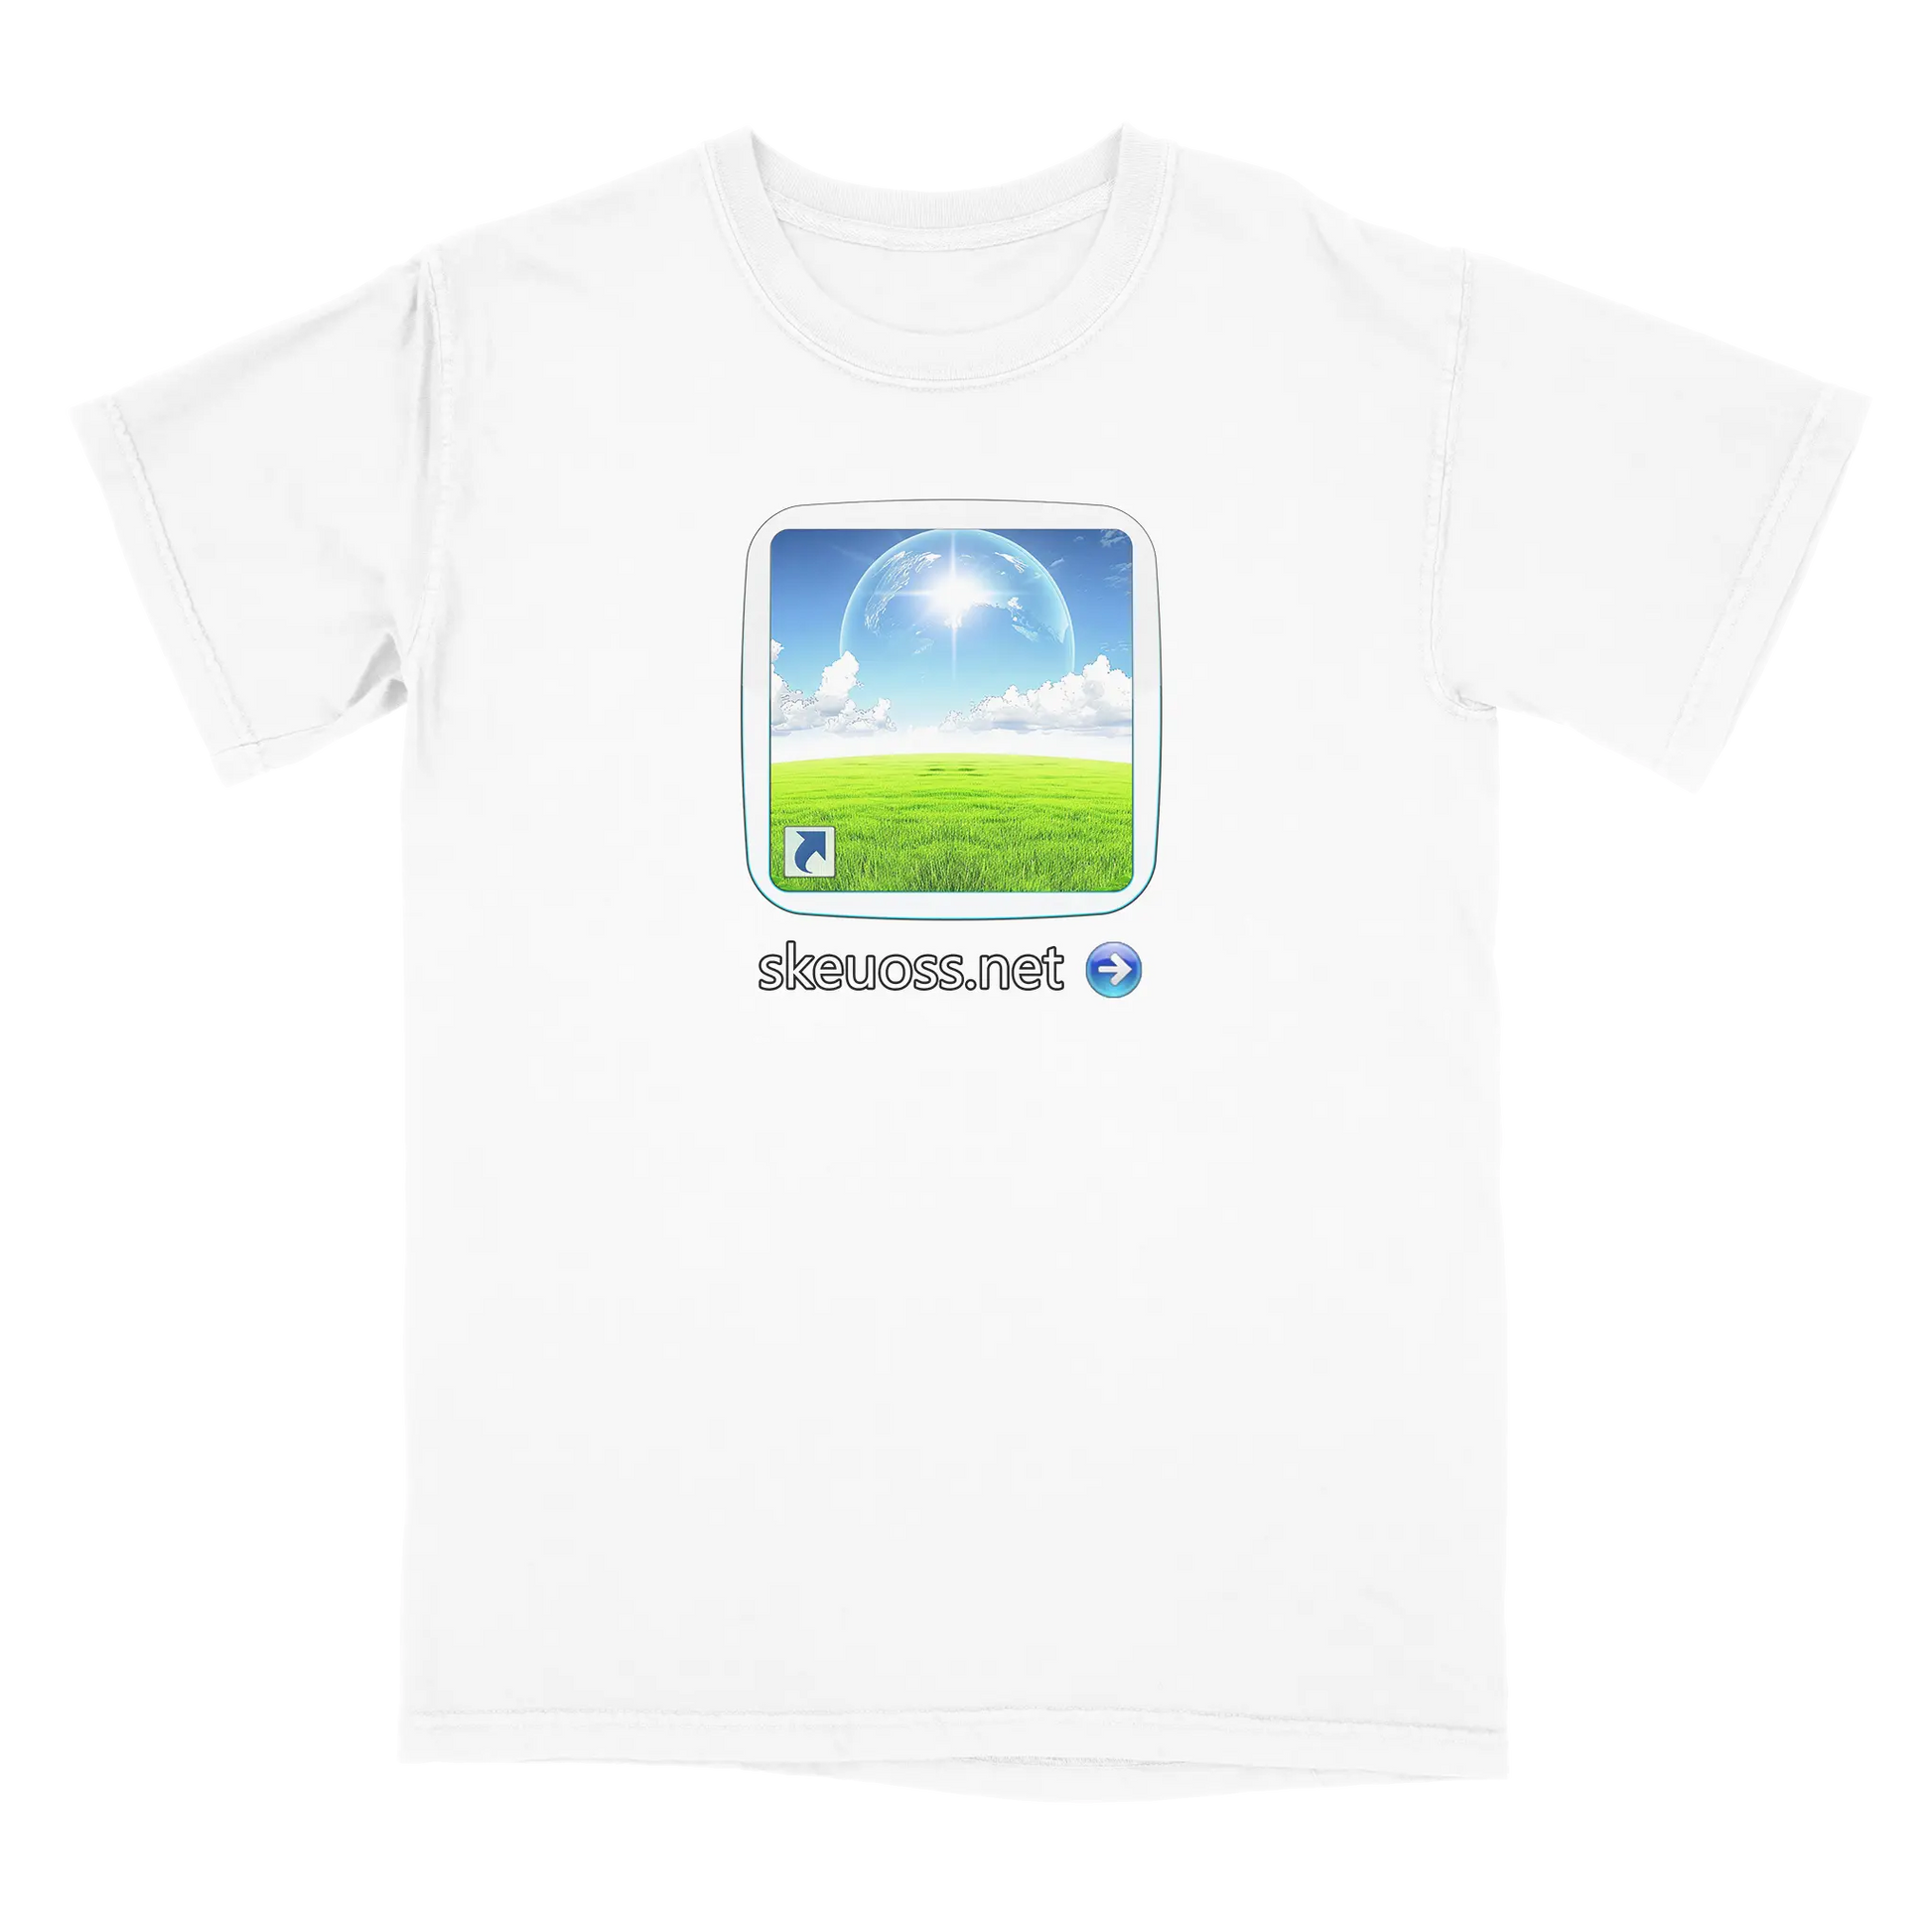 Frutiger Aero T-shirt - User Login Collection - User 212